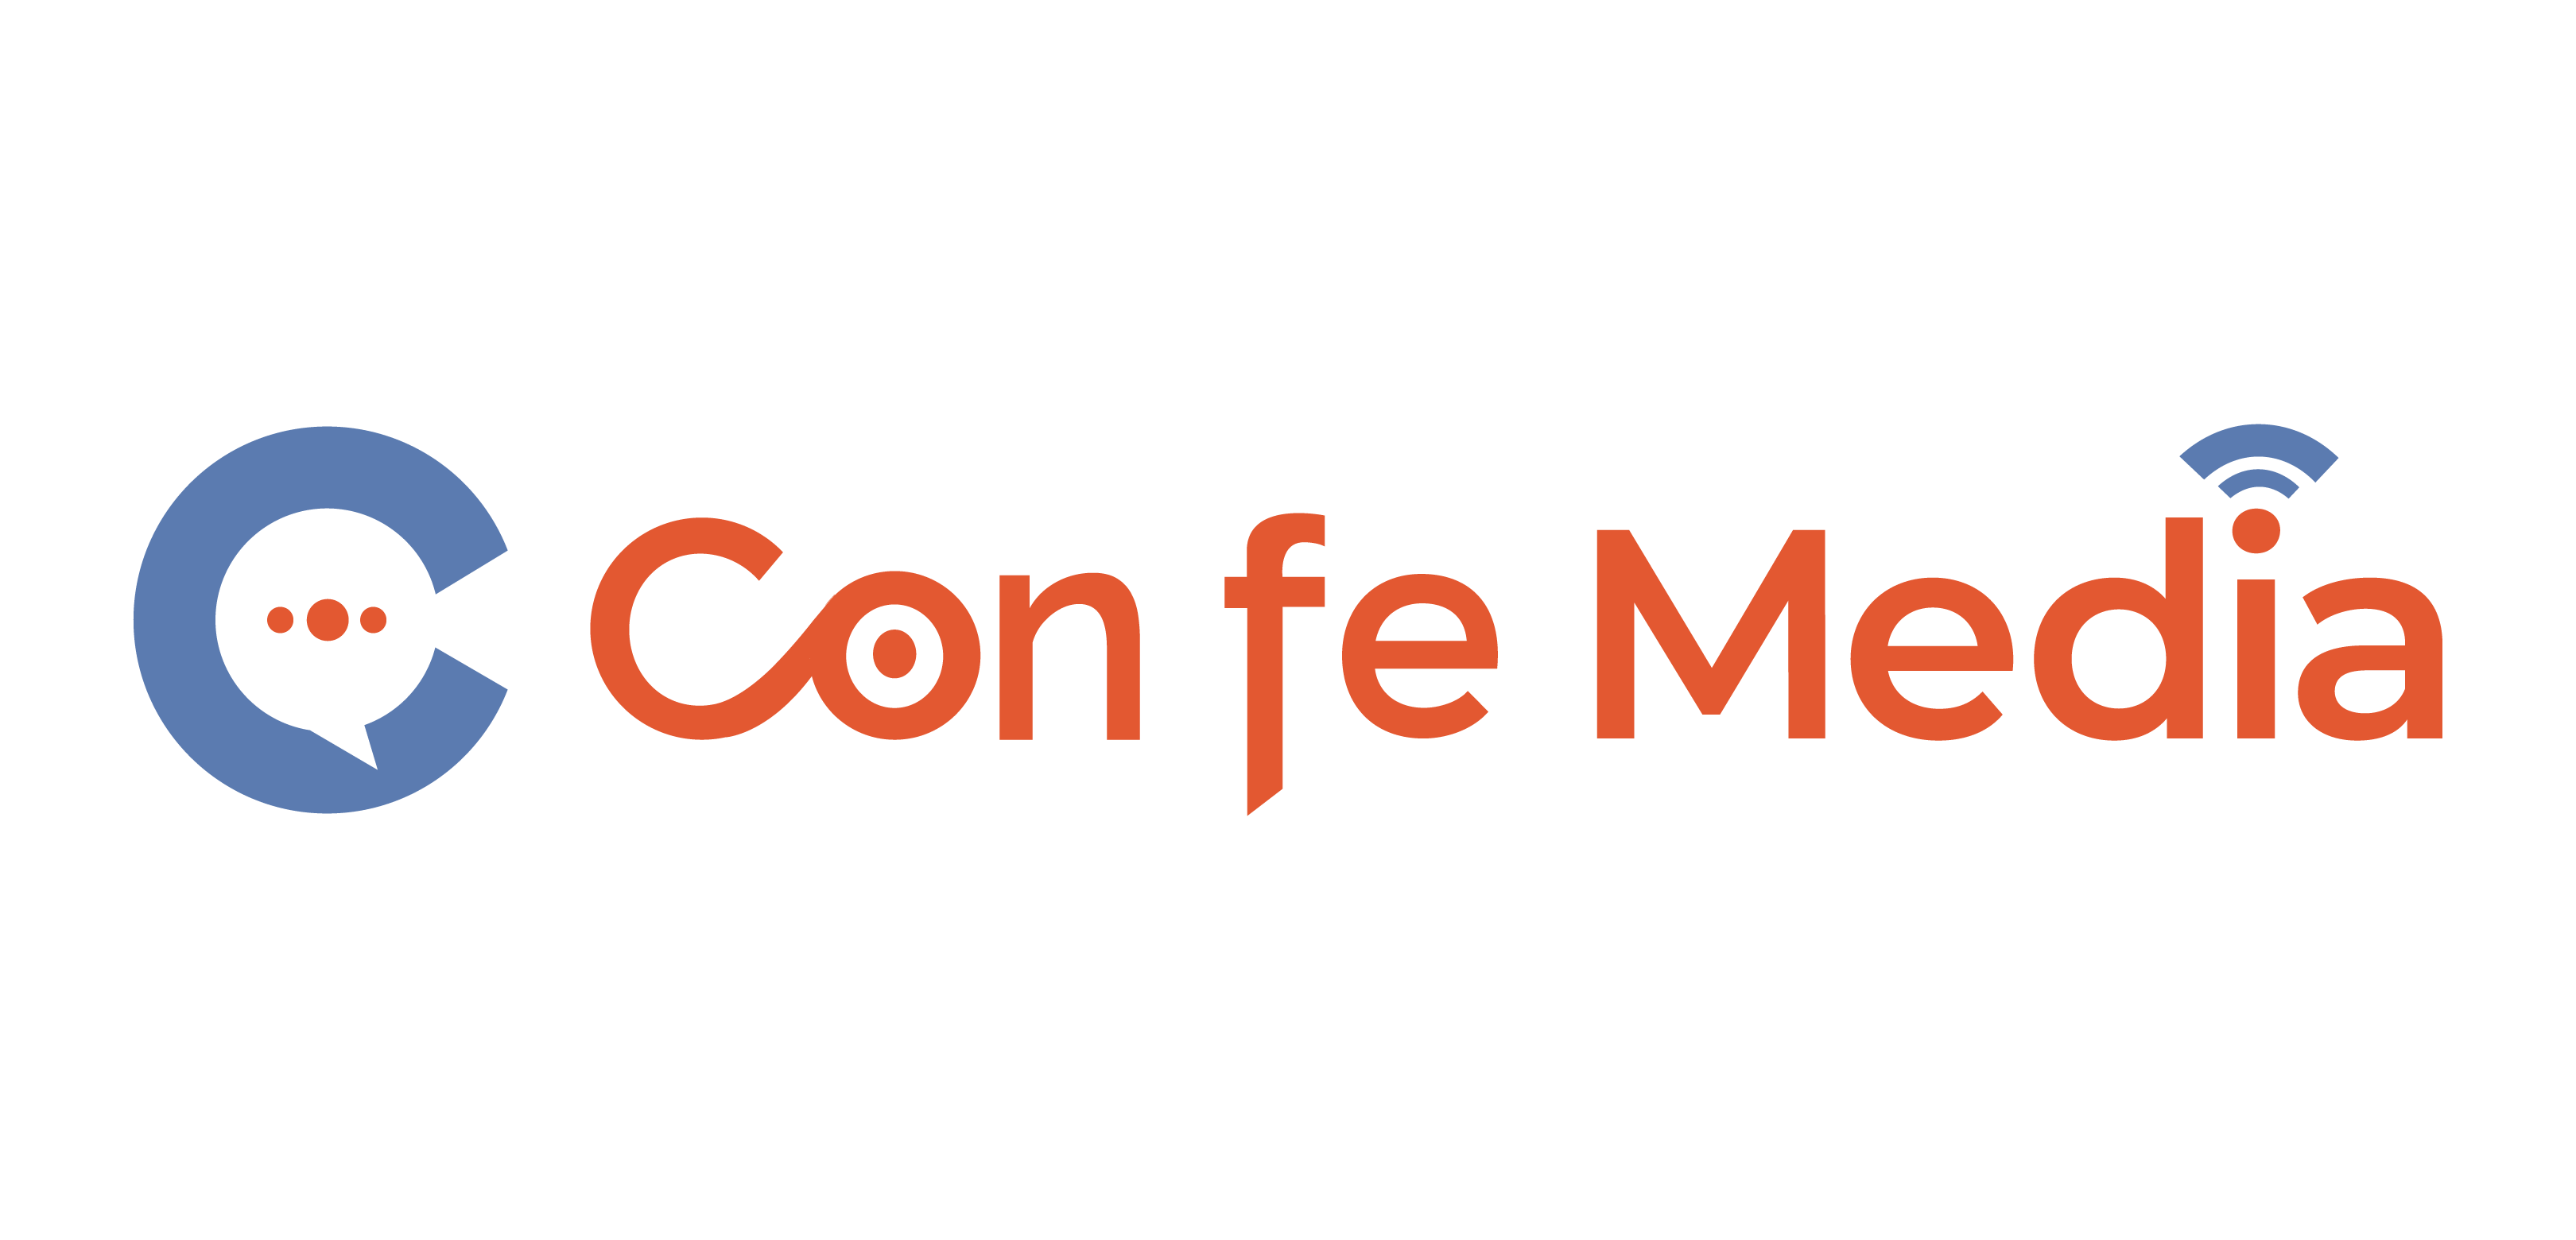 Confemedia